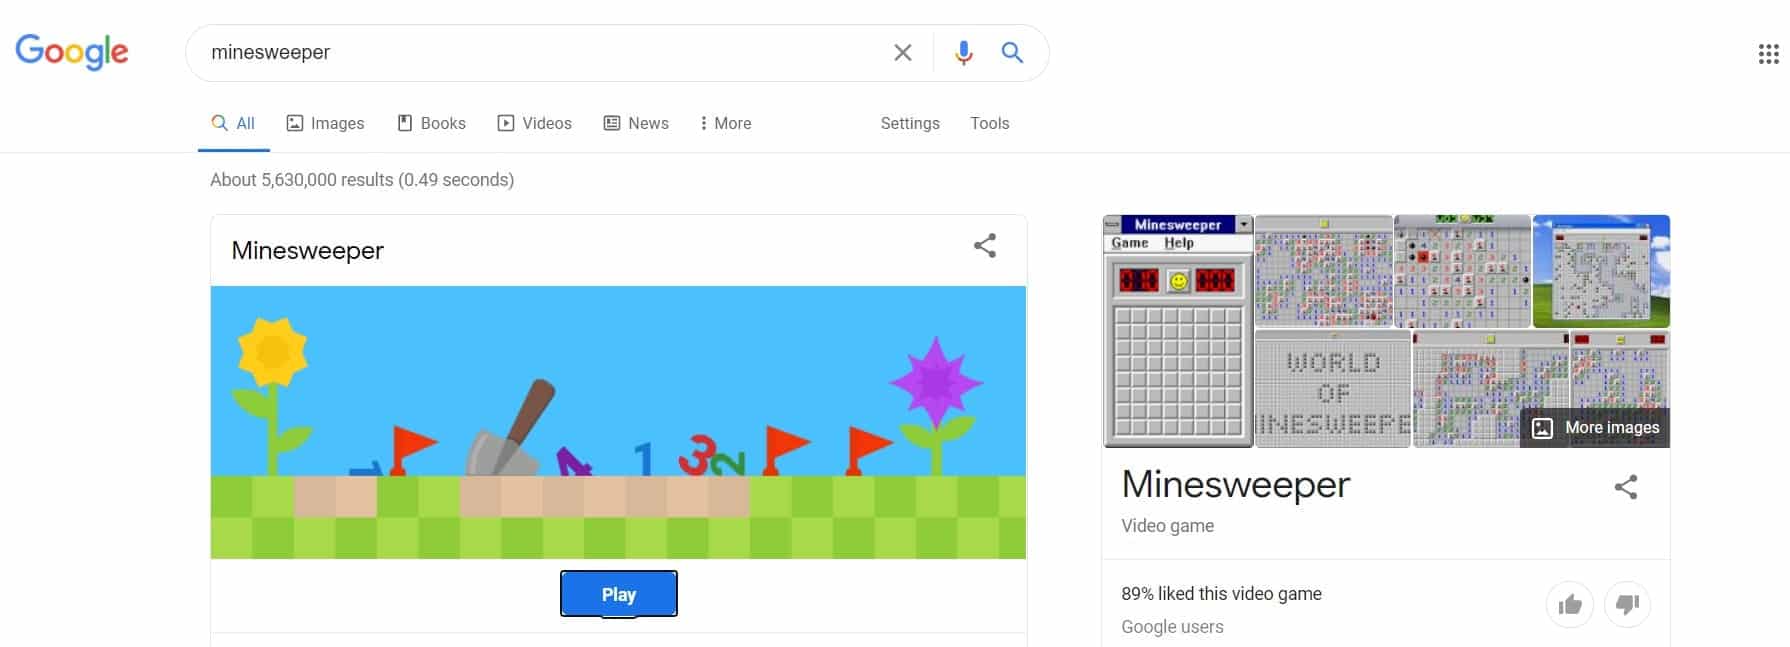 Minesweeper Windows game